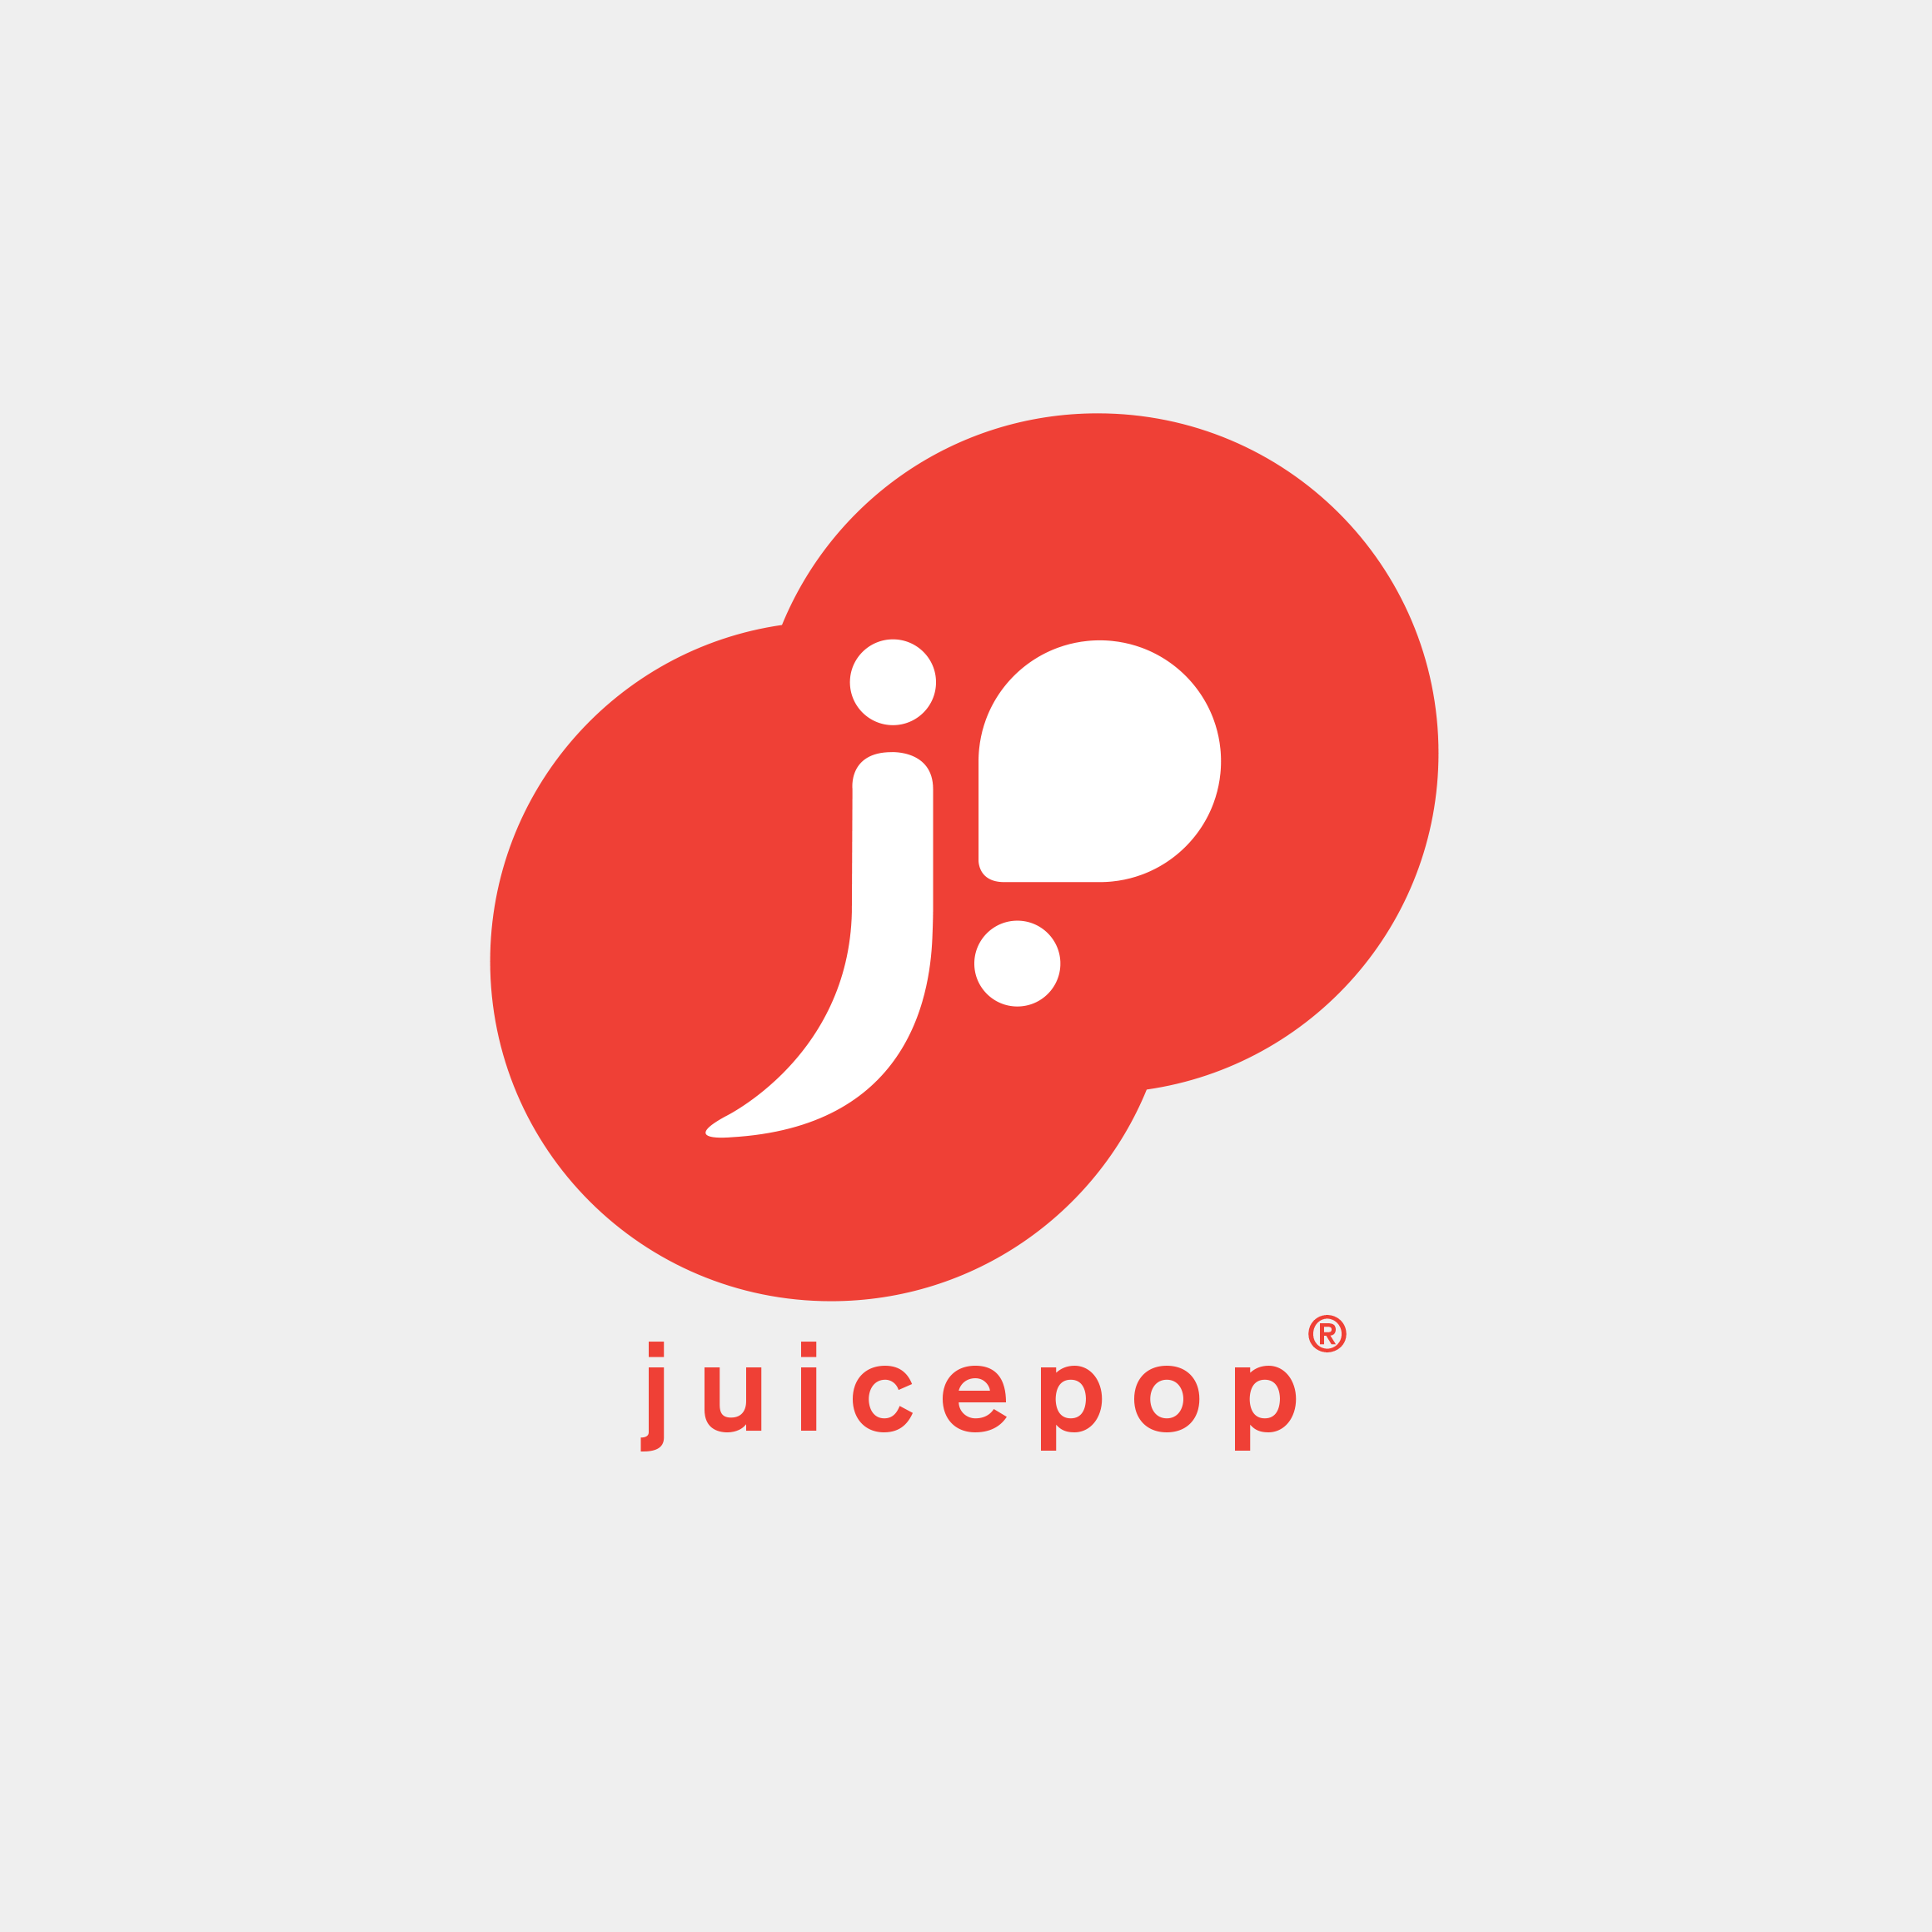 juicepop logo